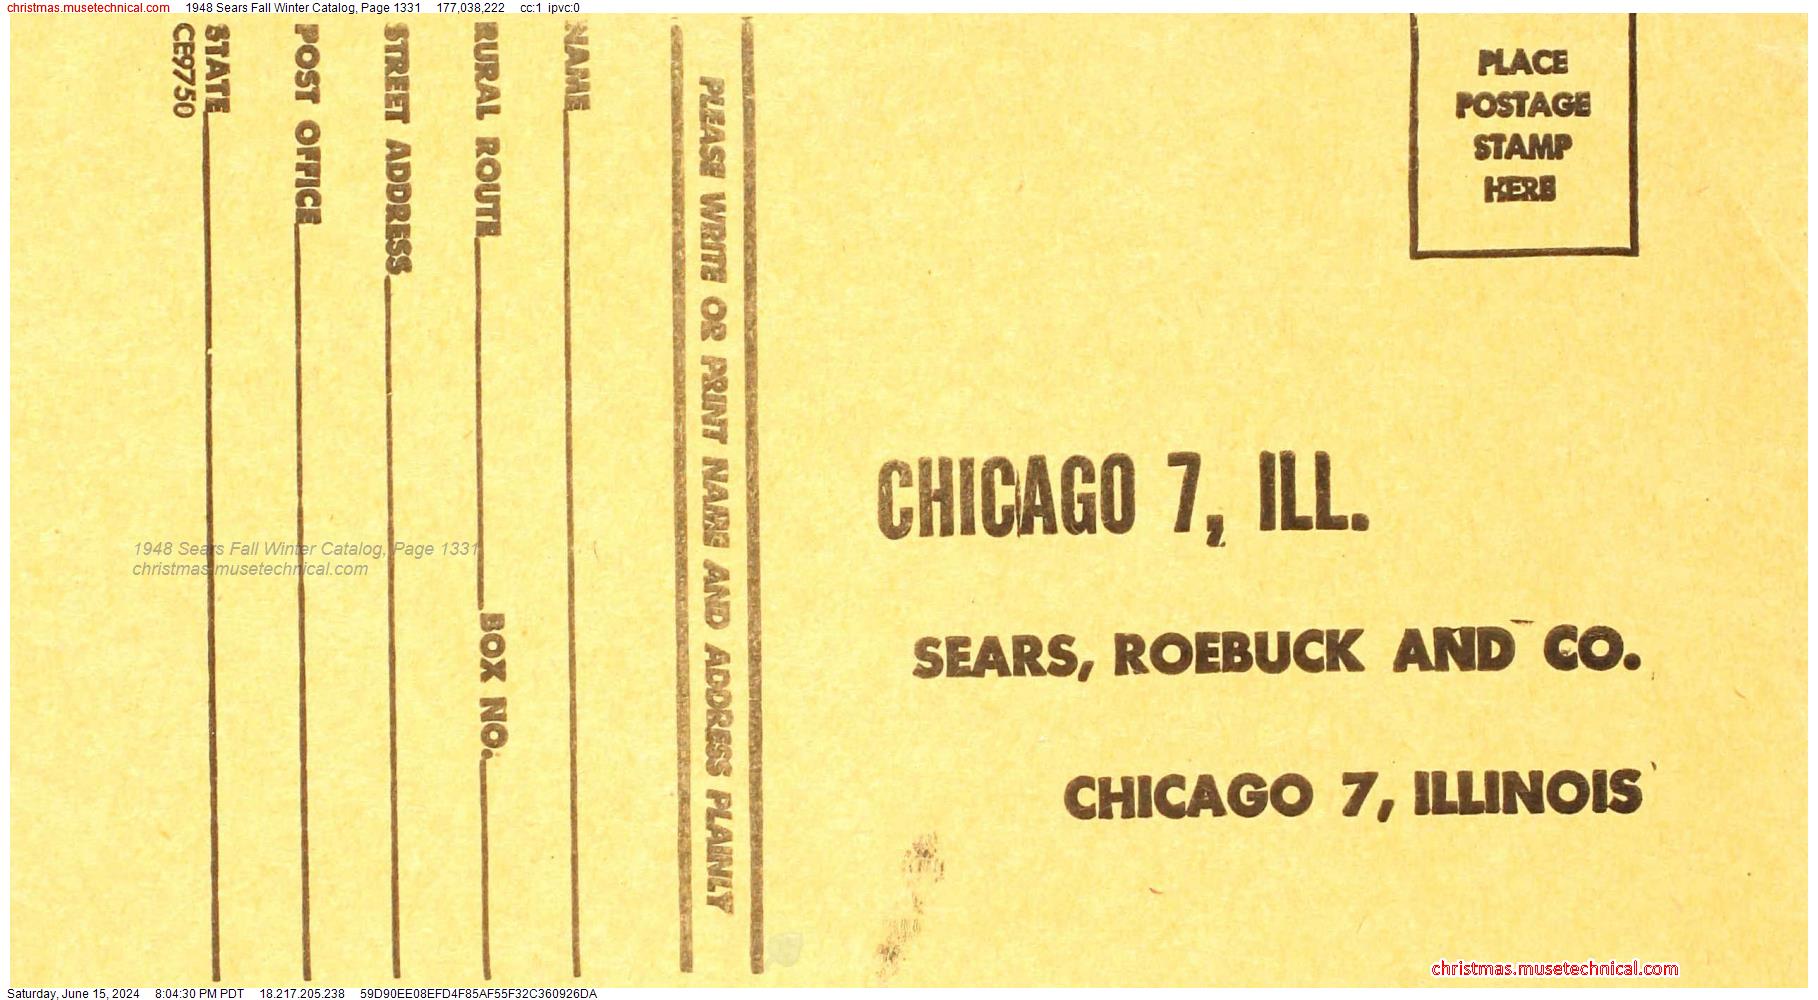 1948 Sears Fall Winter Catalog, Page 1331